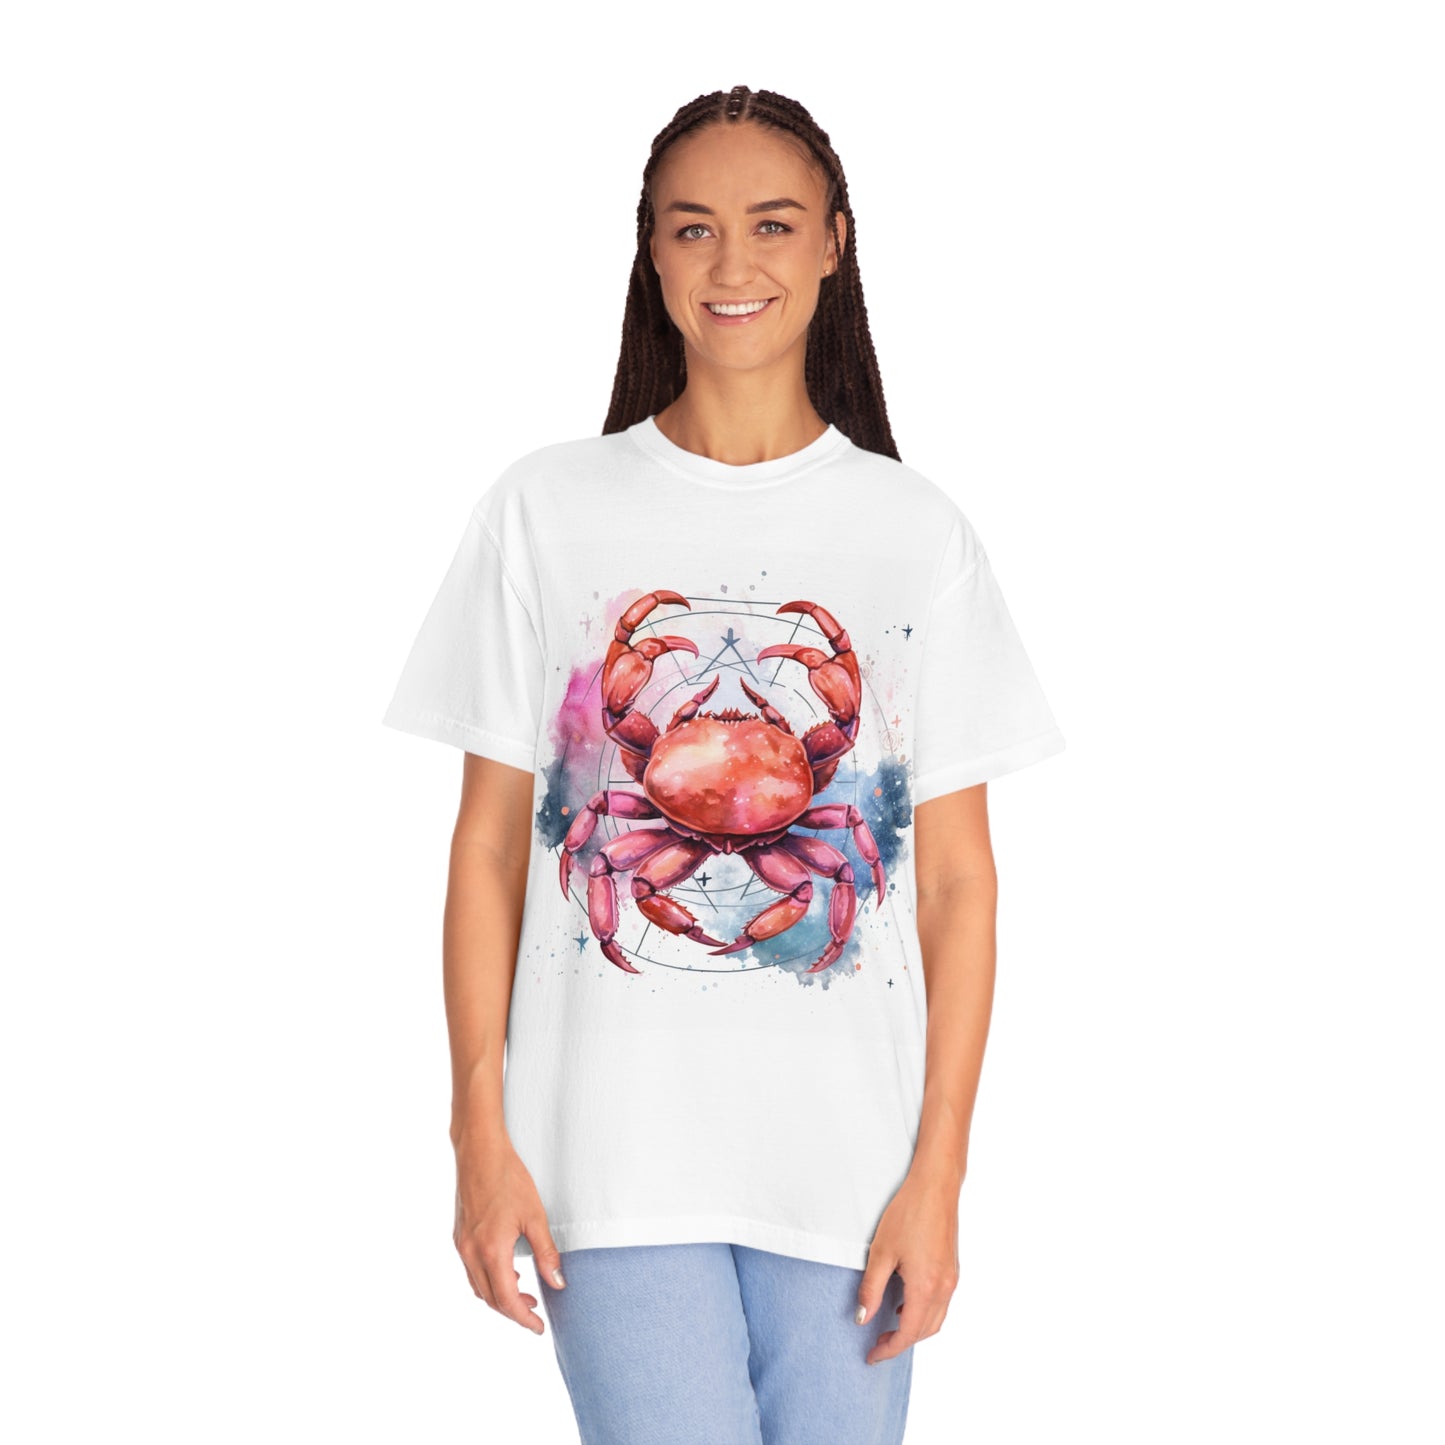 Cancer Star Sign - Elegant Zodiac Astrology - Unisex Garment-Dyed T-shirt